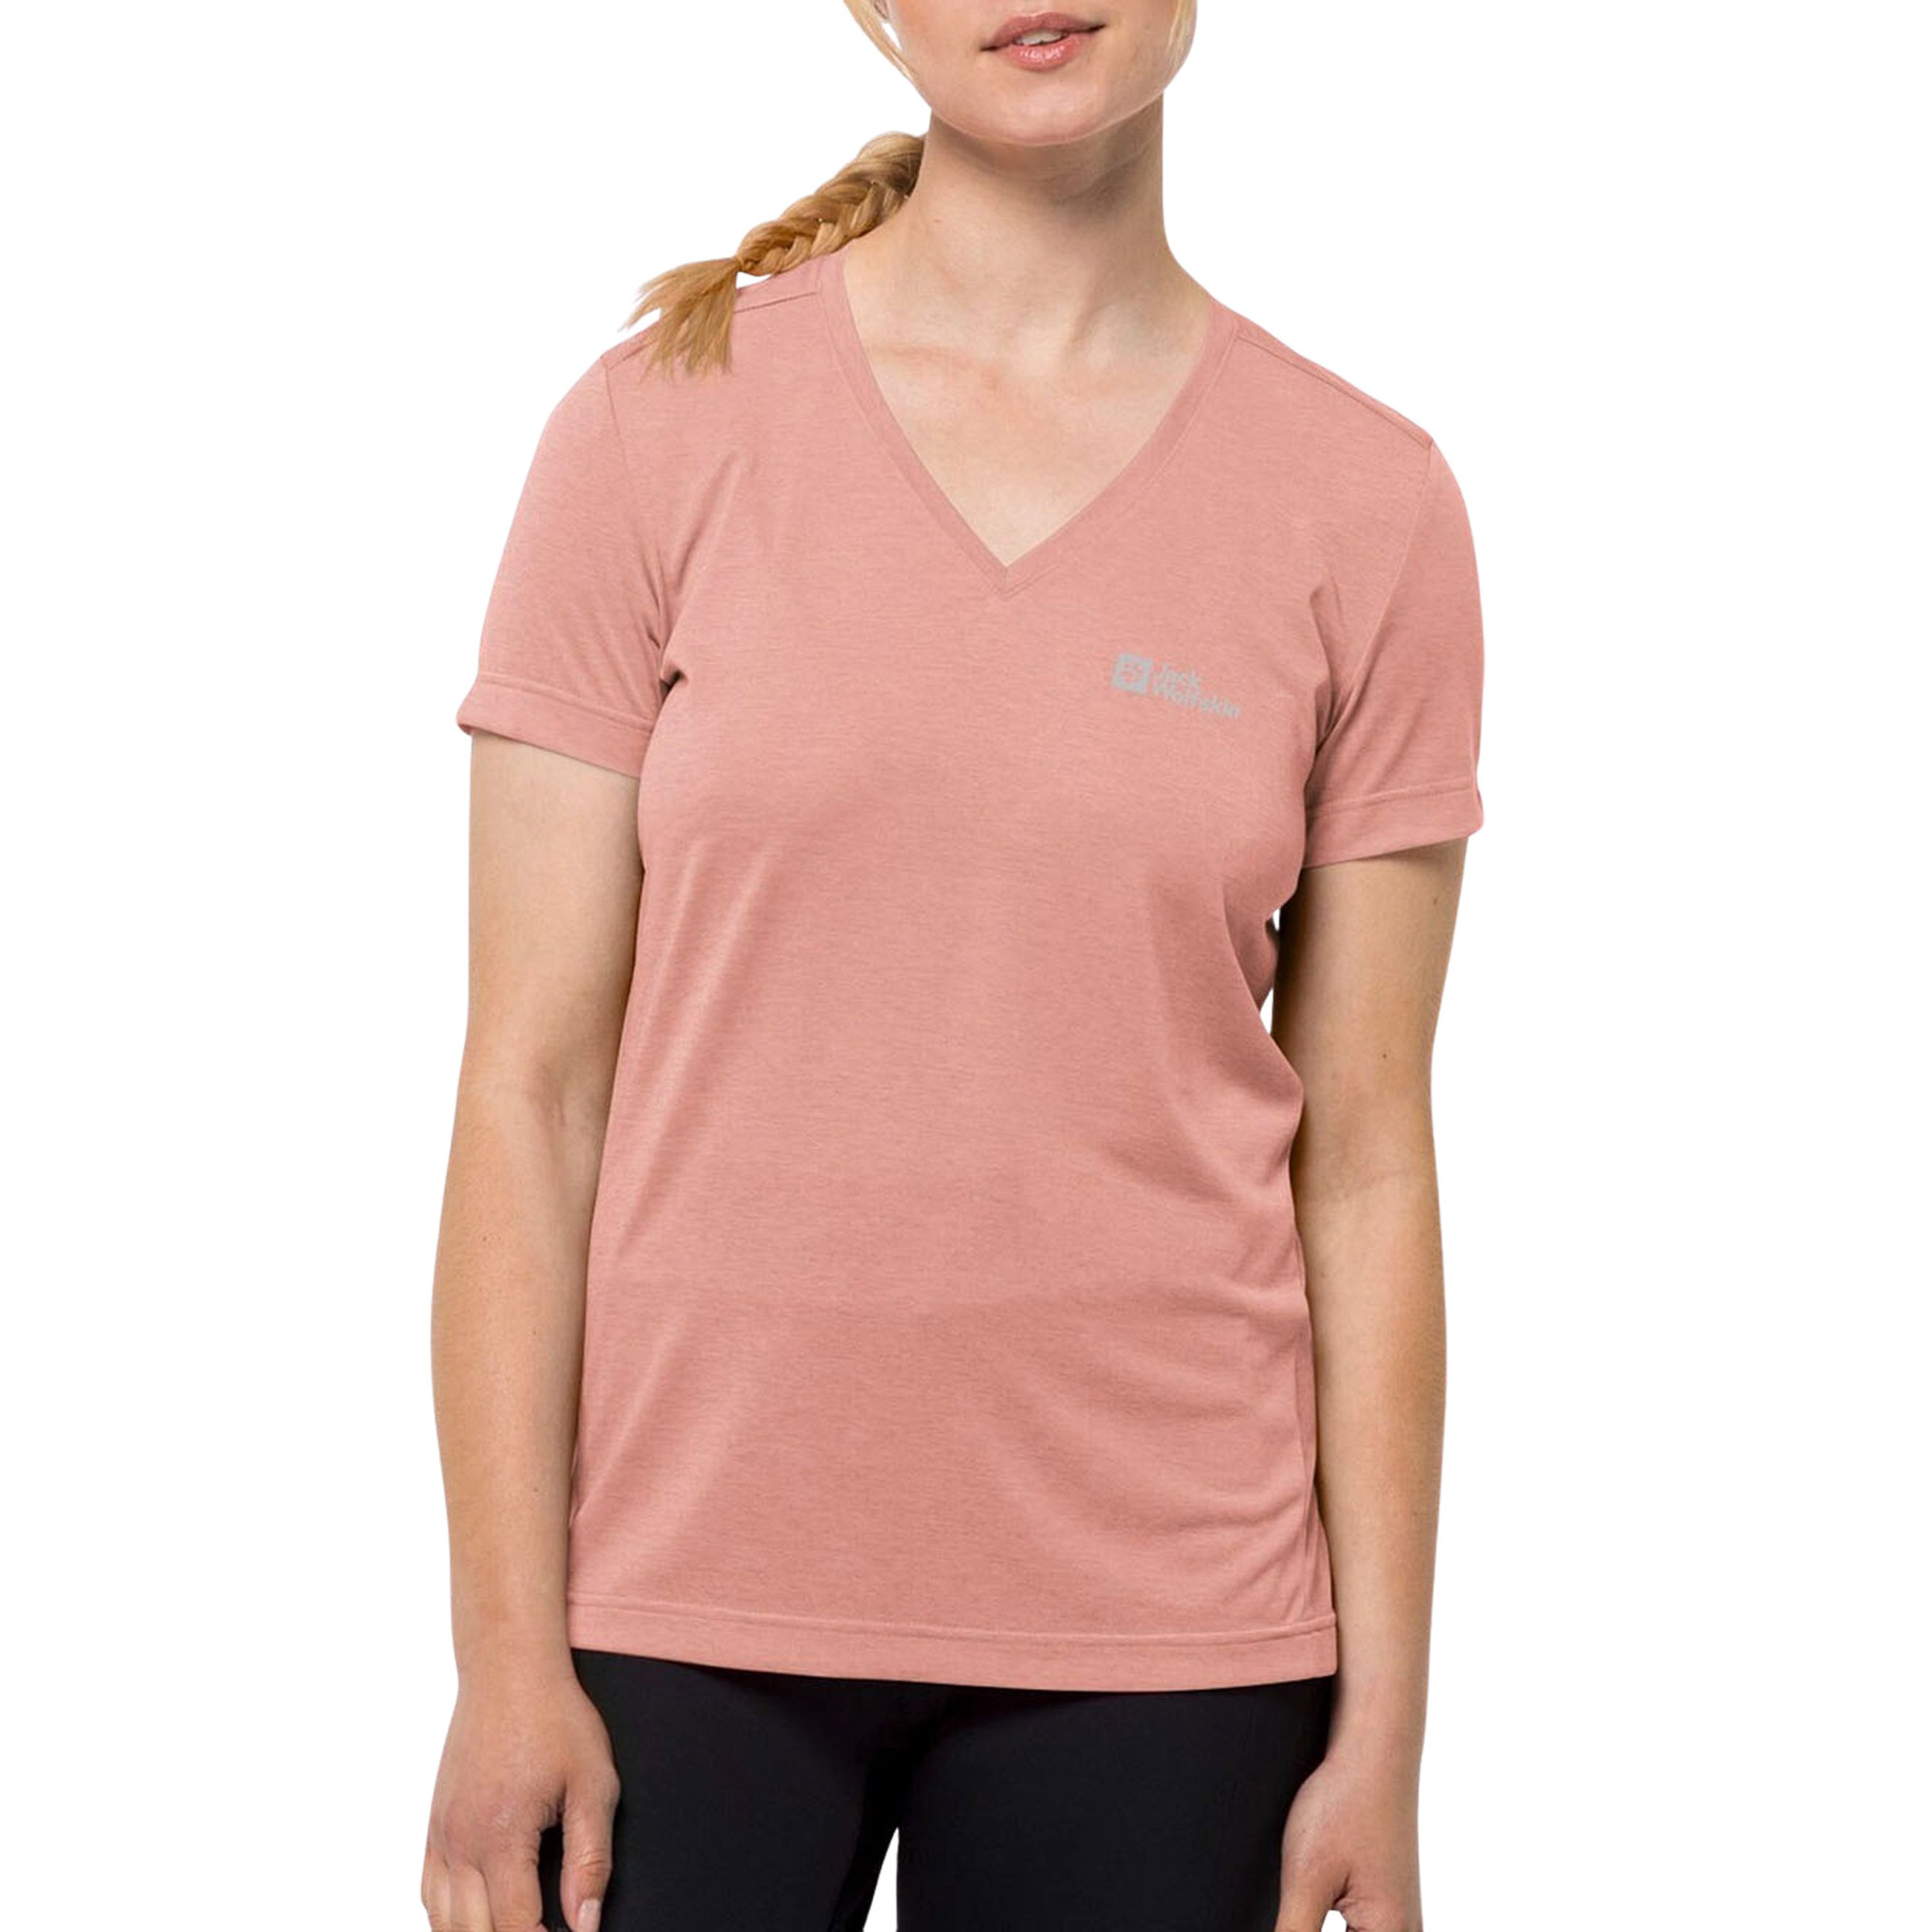 Jack Wolfskin Crosstrail T-Shirt Women Functioneel shirt Dames XL bruin rose dawn